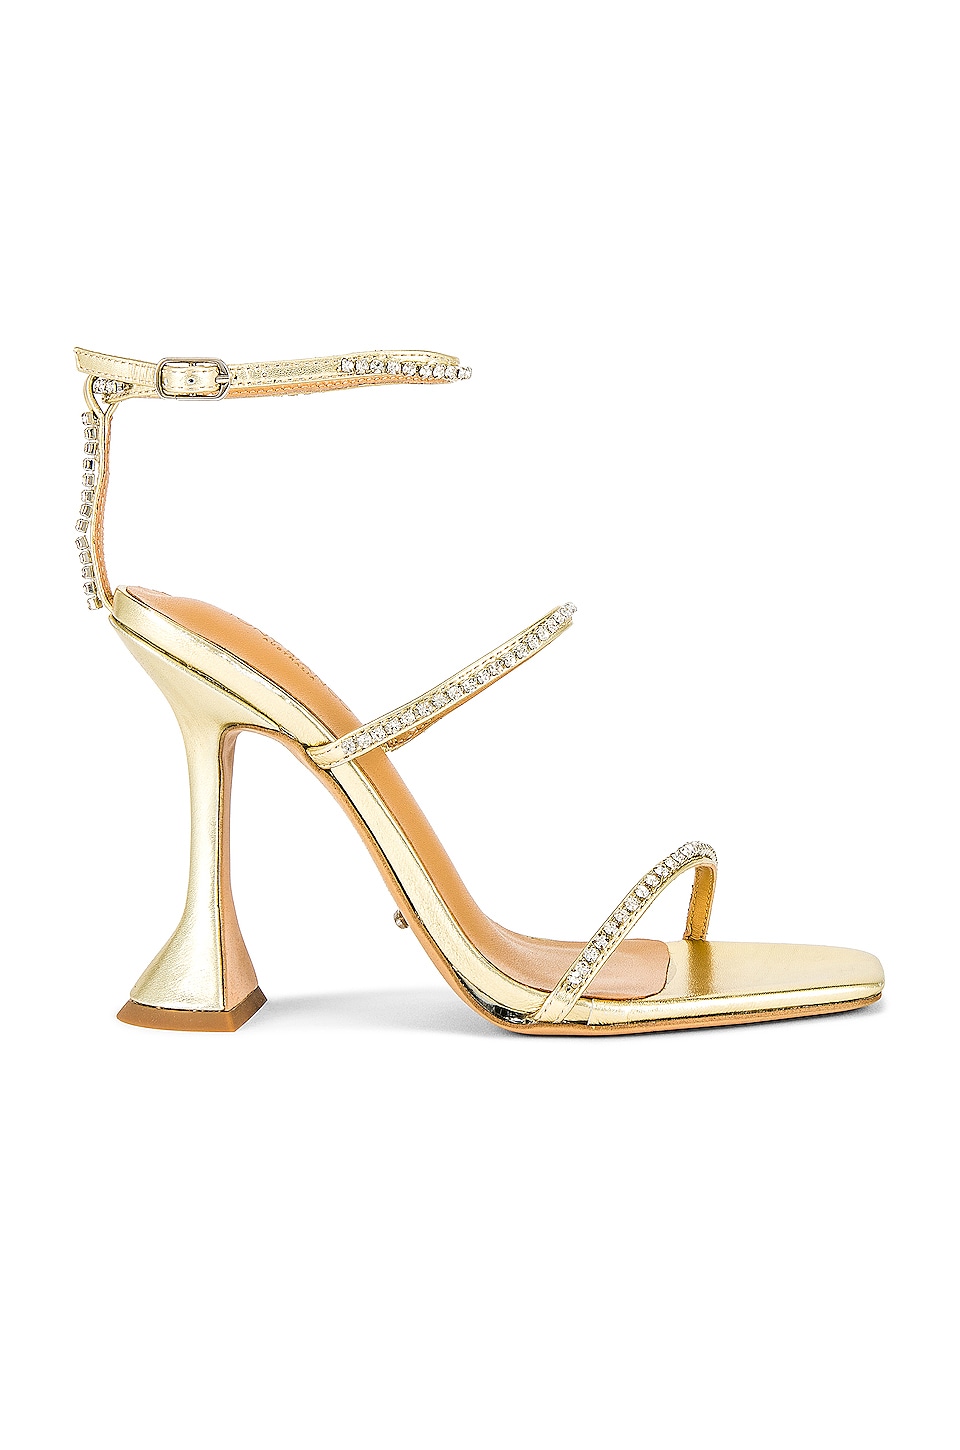 Gold Tony Bianco heels that look like Amina Muaddi 